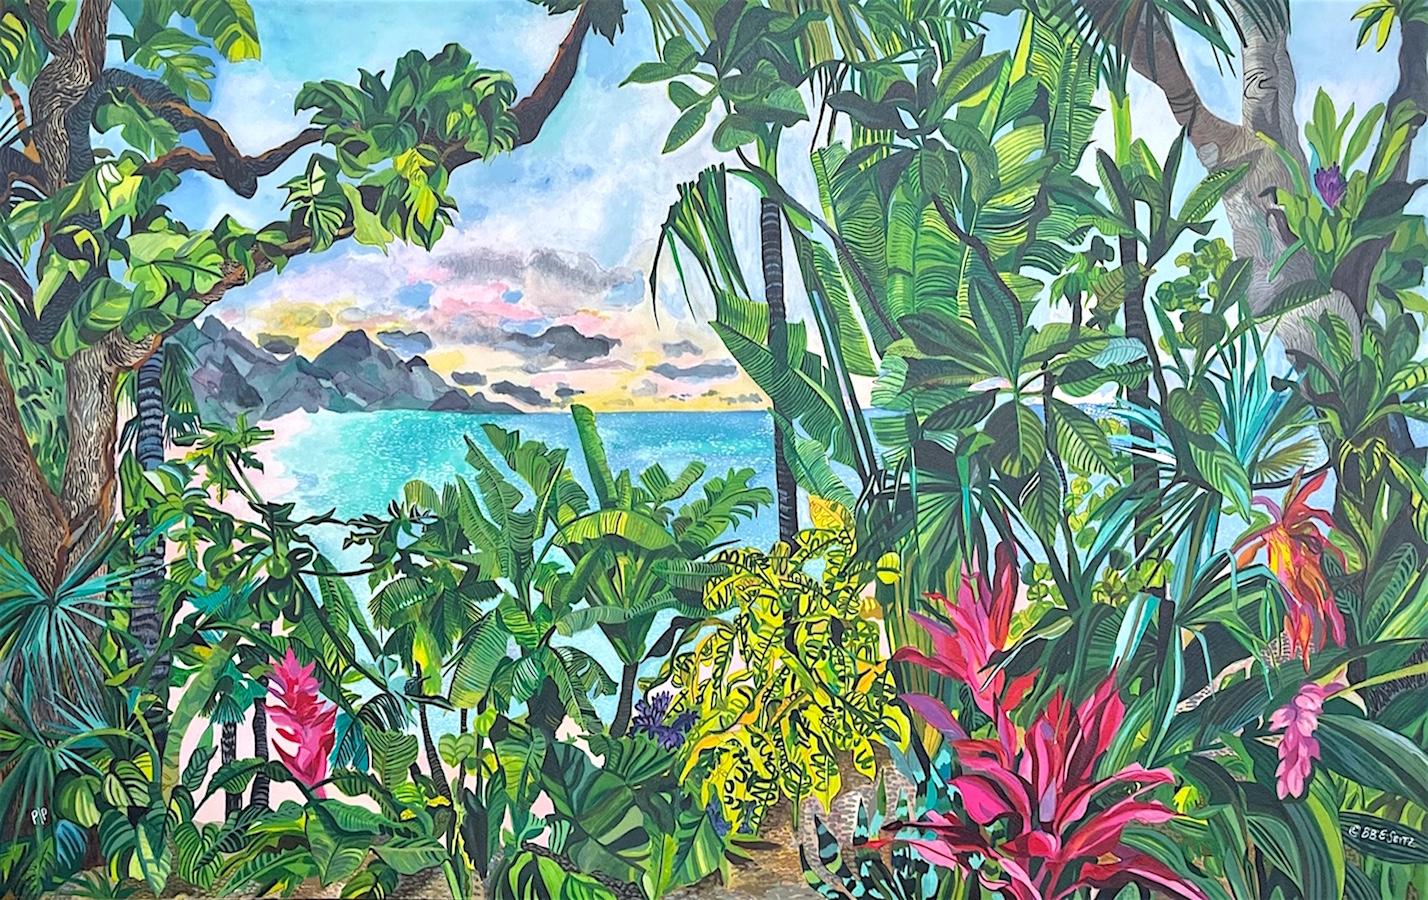 Eileen Seitz Landscape Print - BEYOND EARTHS BEAUTY Signed Lithograph Colorful Island Landscape Tropical Plants